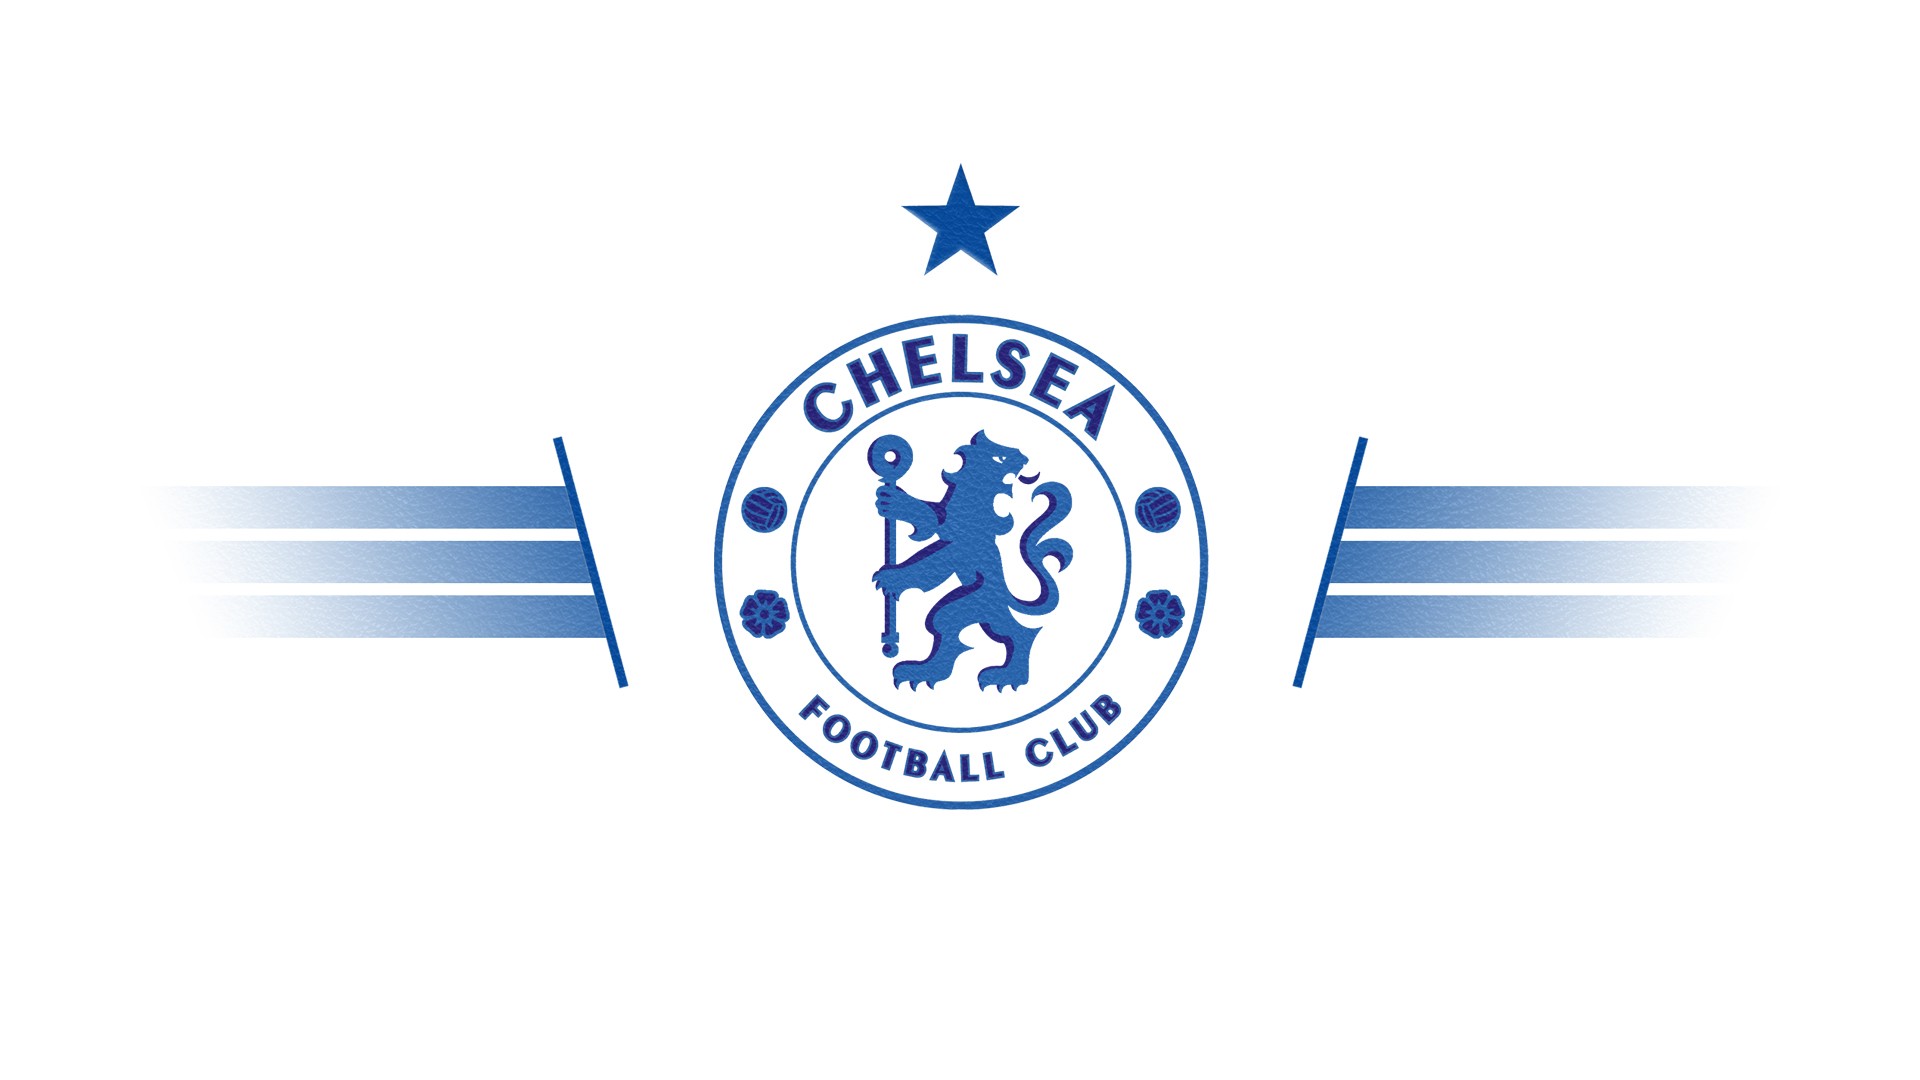 General 1920x1080 Chelsea FC soccer soccer clubs Premier League logo sport simple background England white background